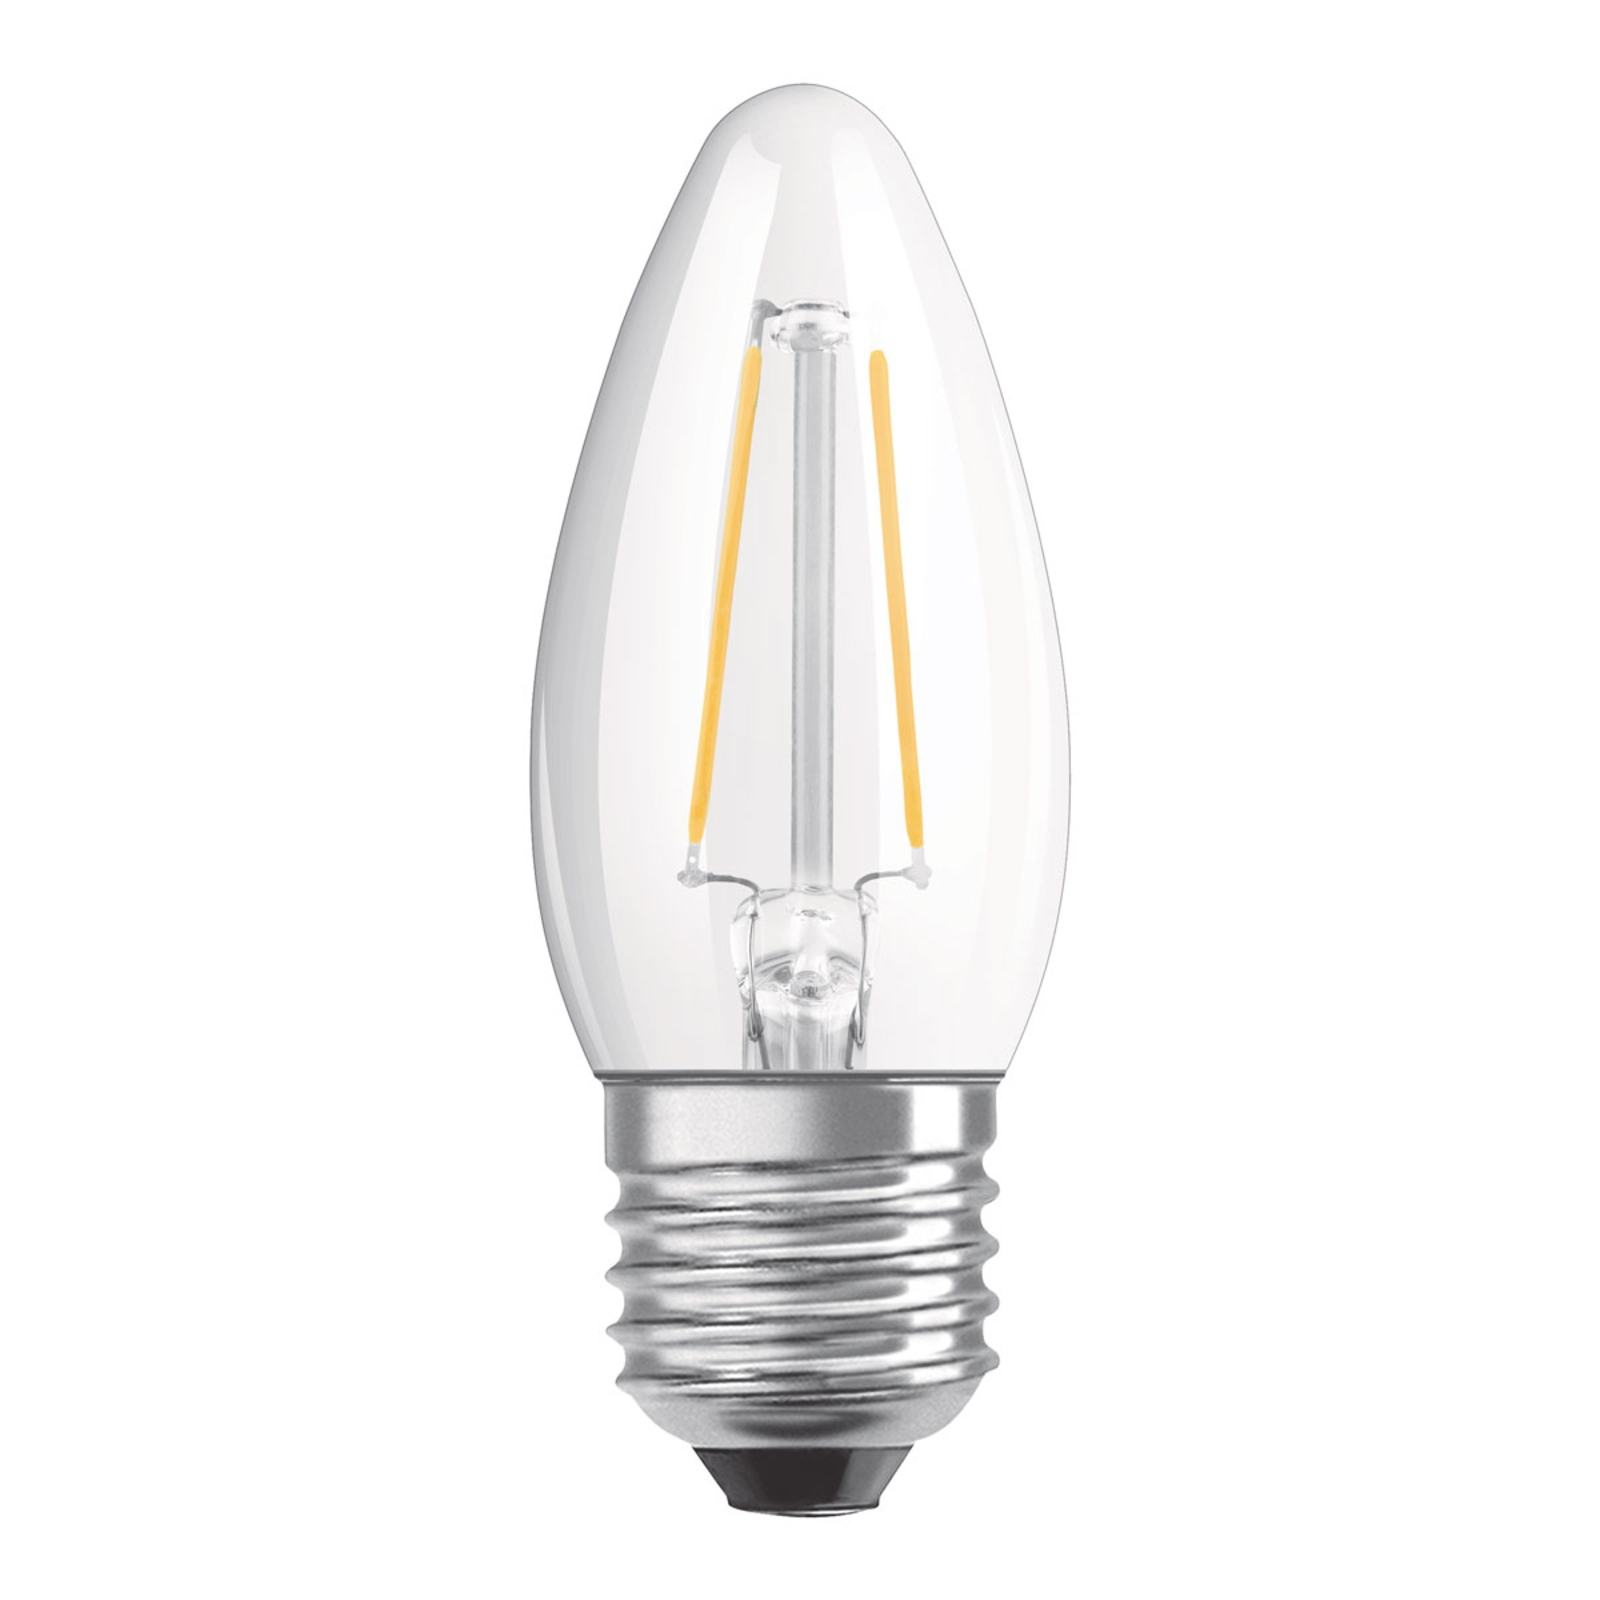 OSRAM LED candela E27 4,8W bianco caldo dimming